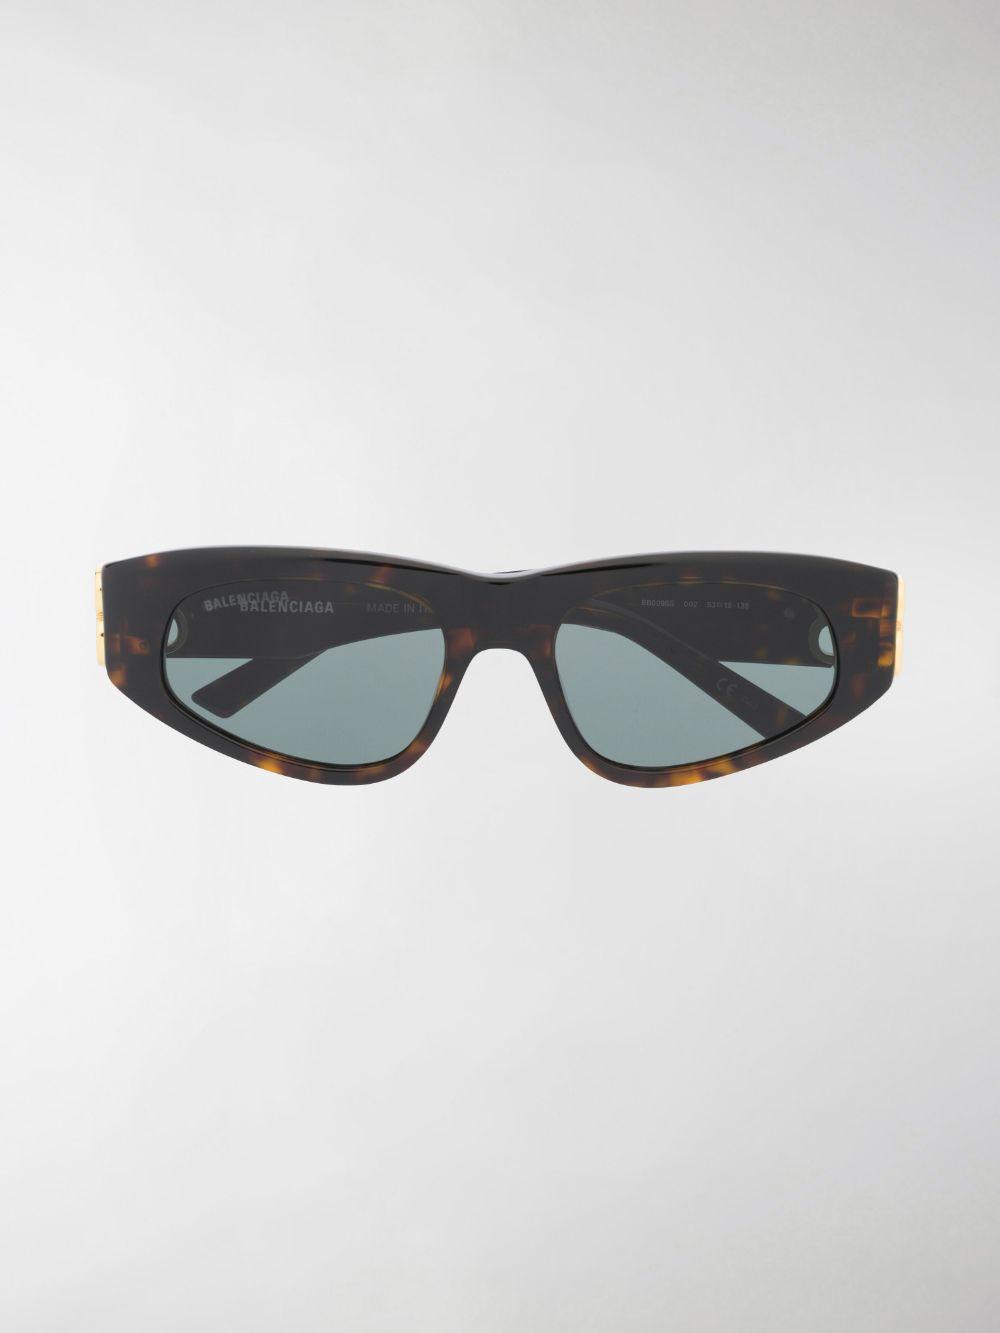 Balenciaga Dynasty D-frame Sunglasses in Brown - Lyst